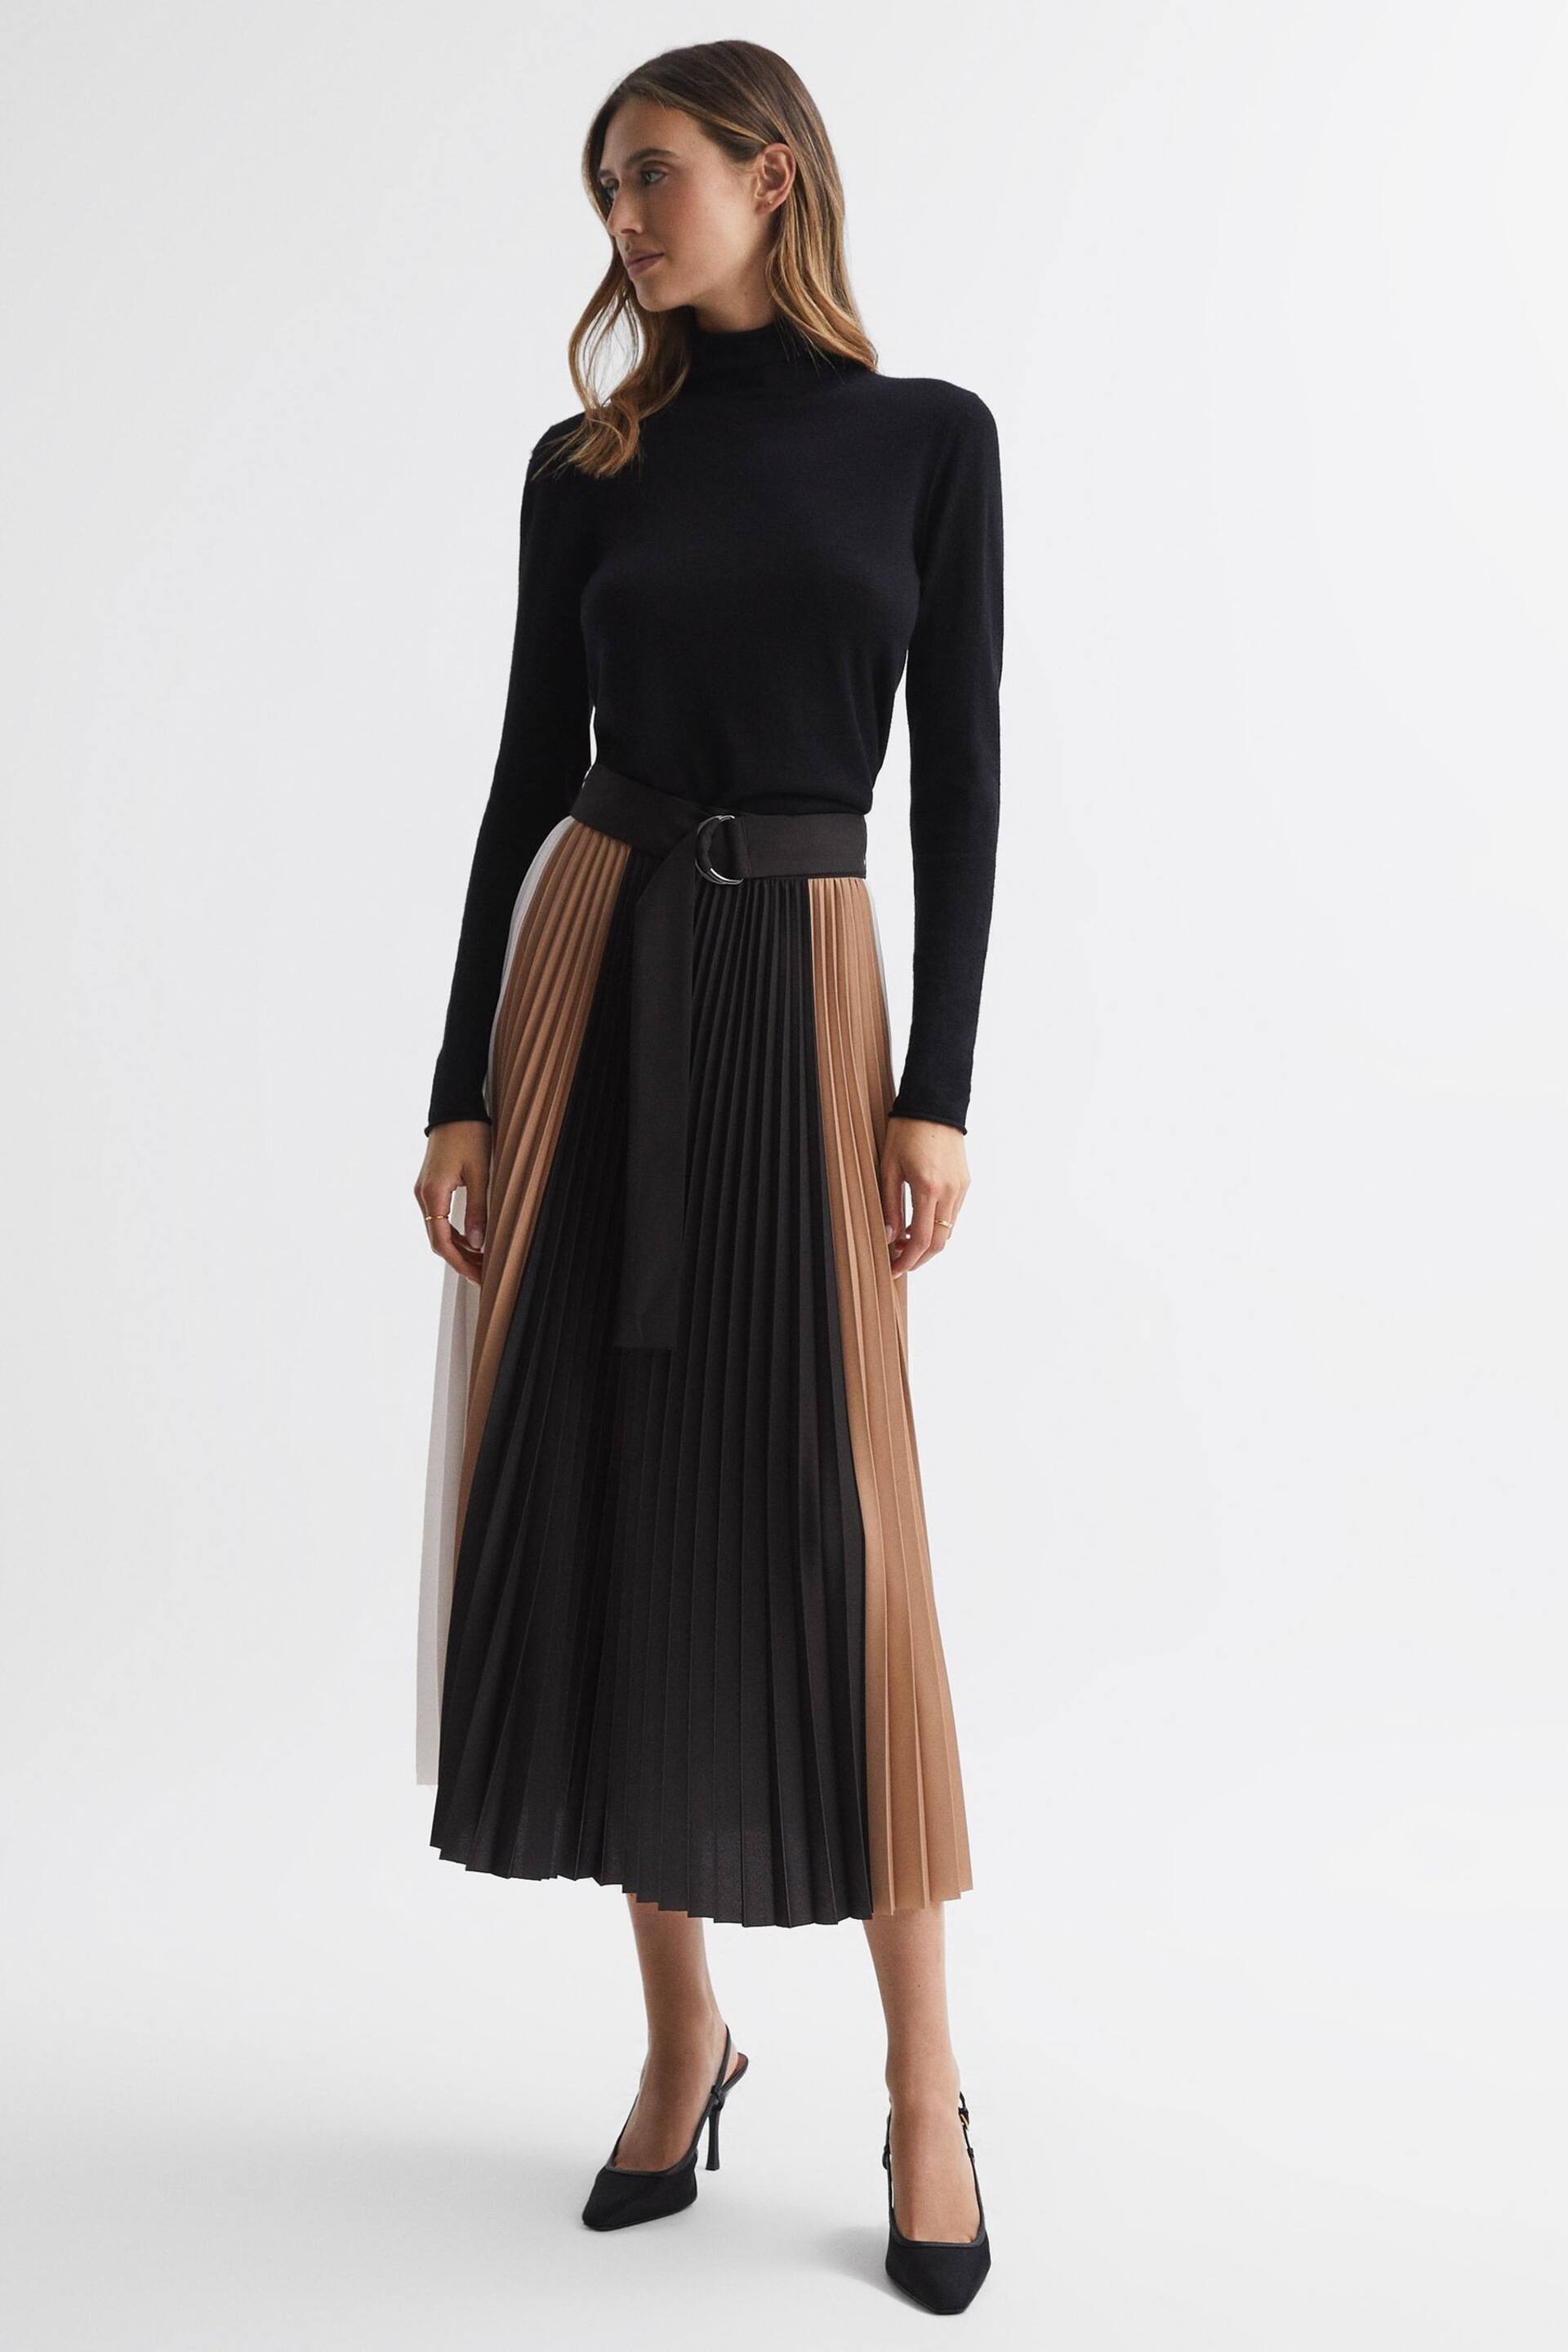 Reiss Black/Camel Ava Colourblock Pleated Midi Skirt - Image 5 of 5